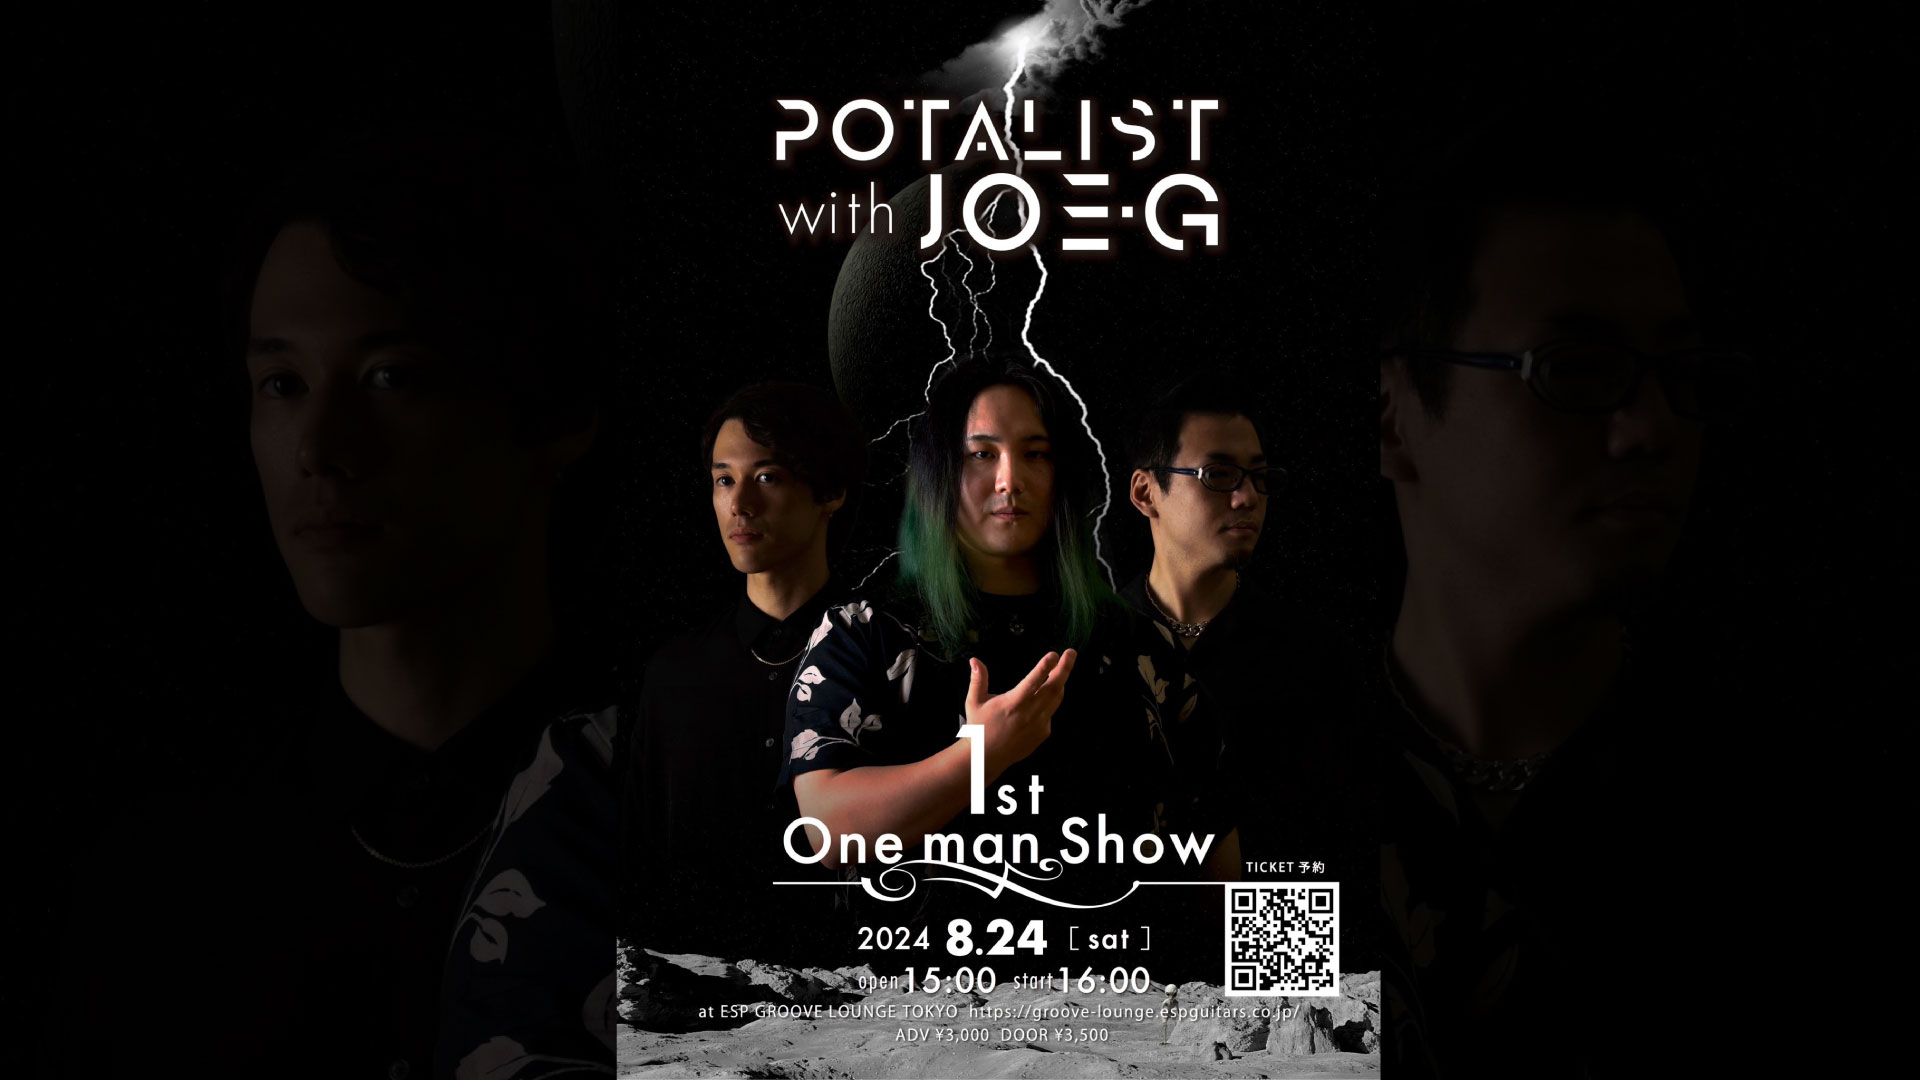 Potalist with Joe-G 1st one-man show